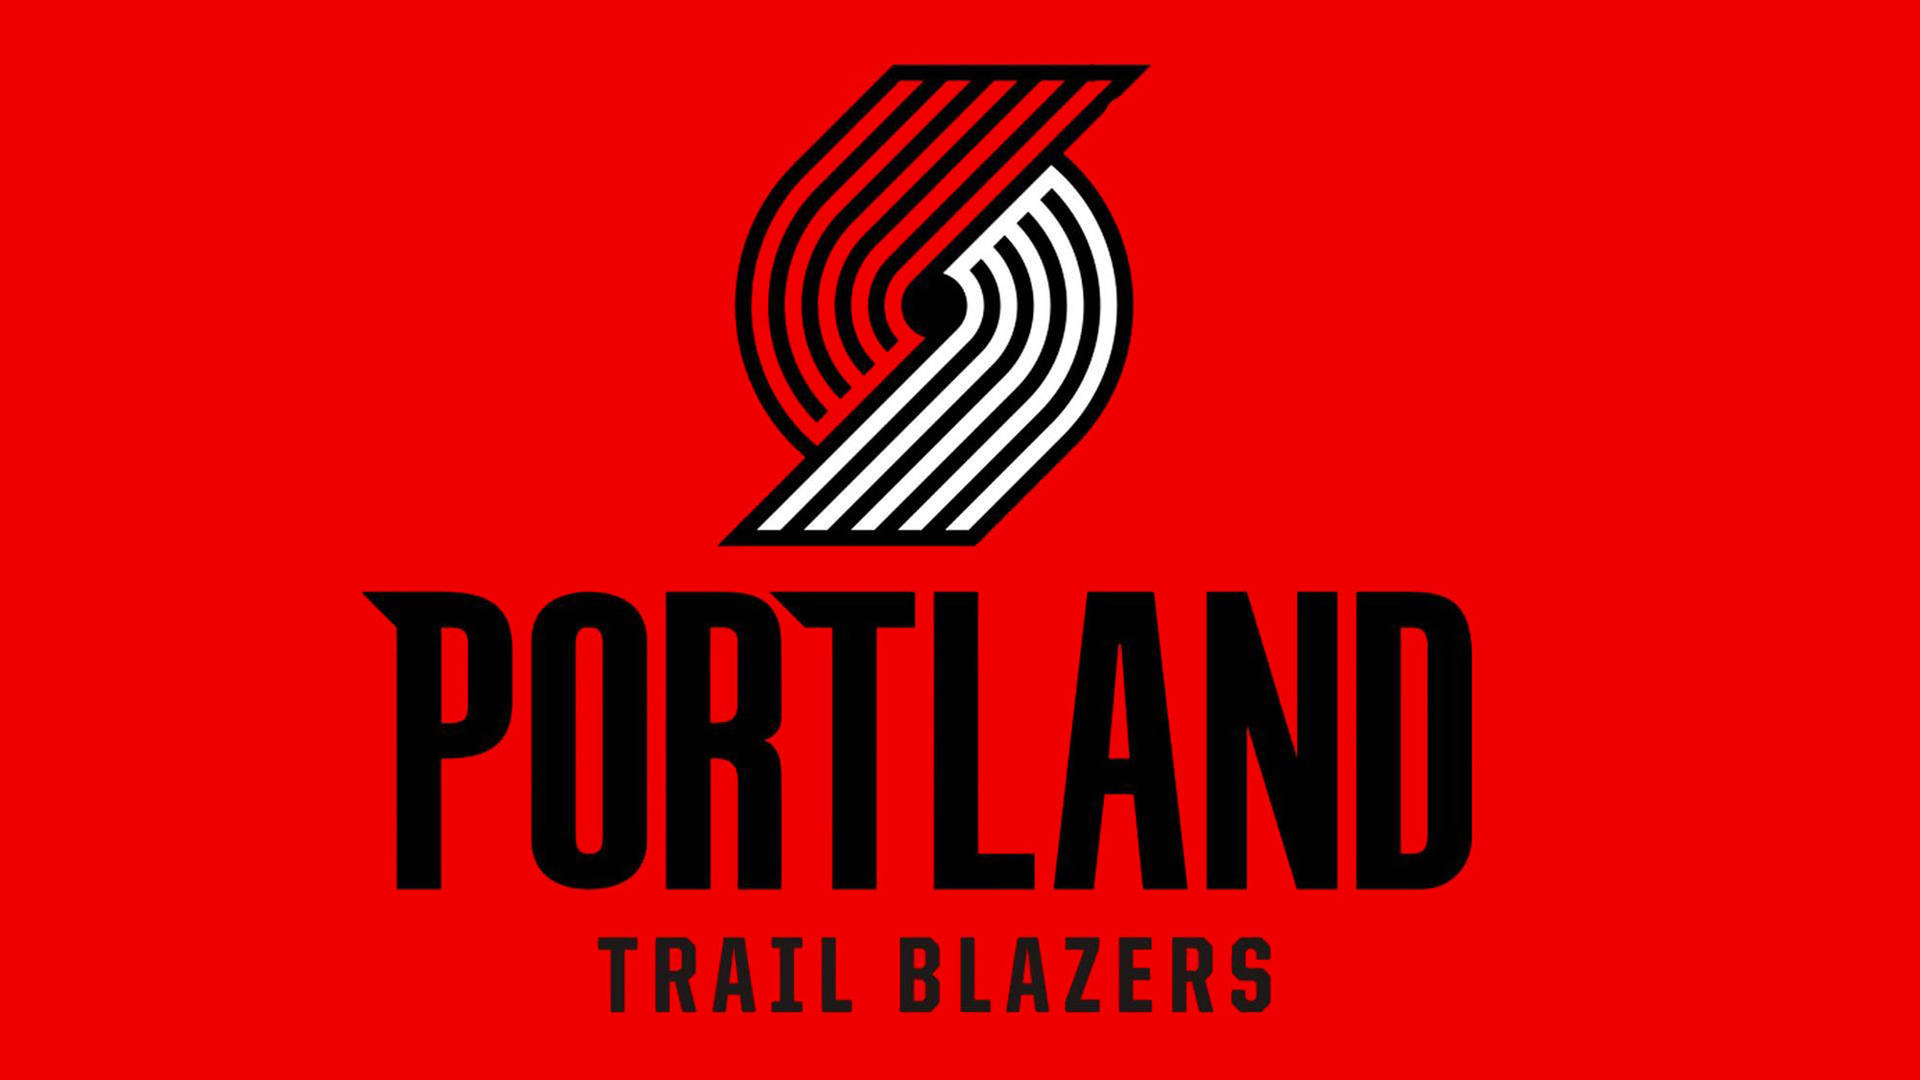 Portland Trail Blazers Red Poster Background